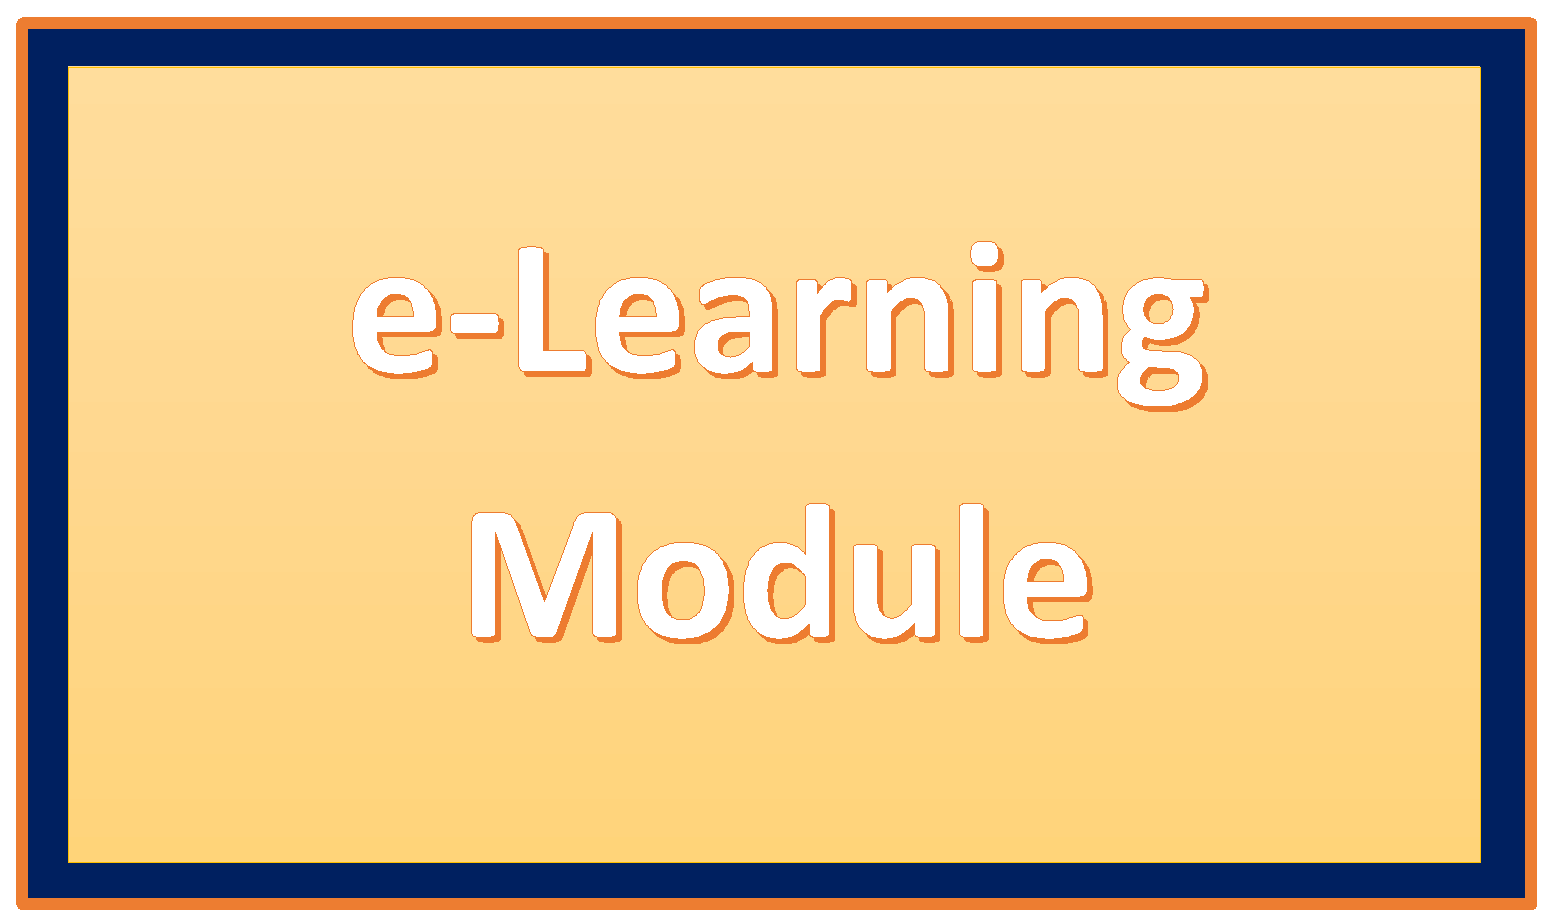 http://study.aisectonline.com/images/Domestic IT Helpdesk Attendant Course Module .png